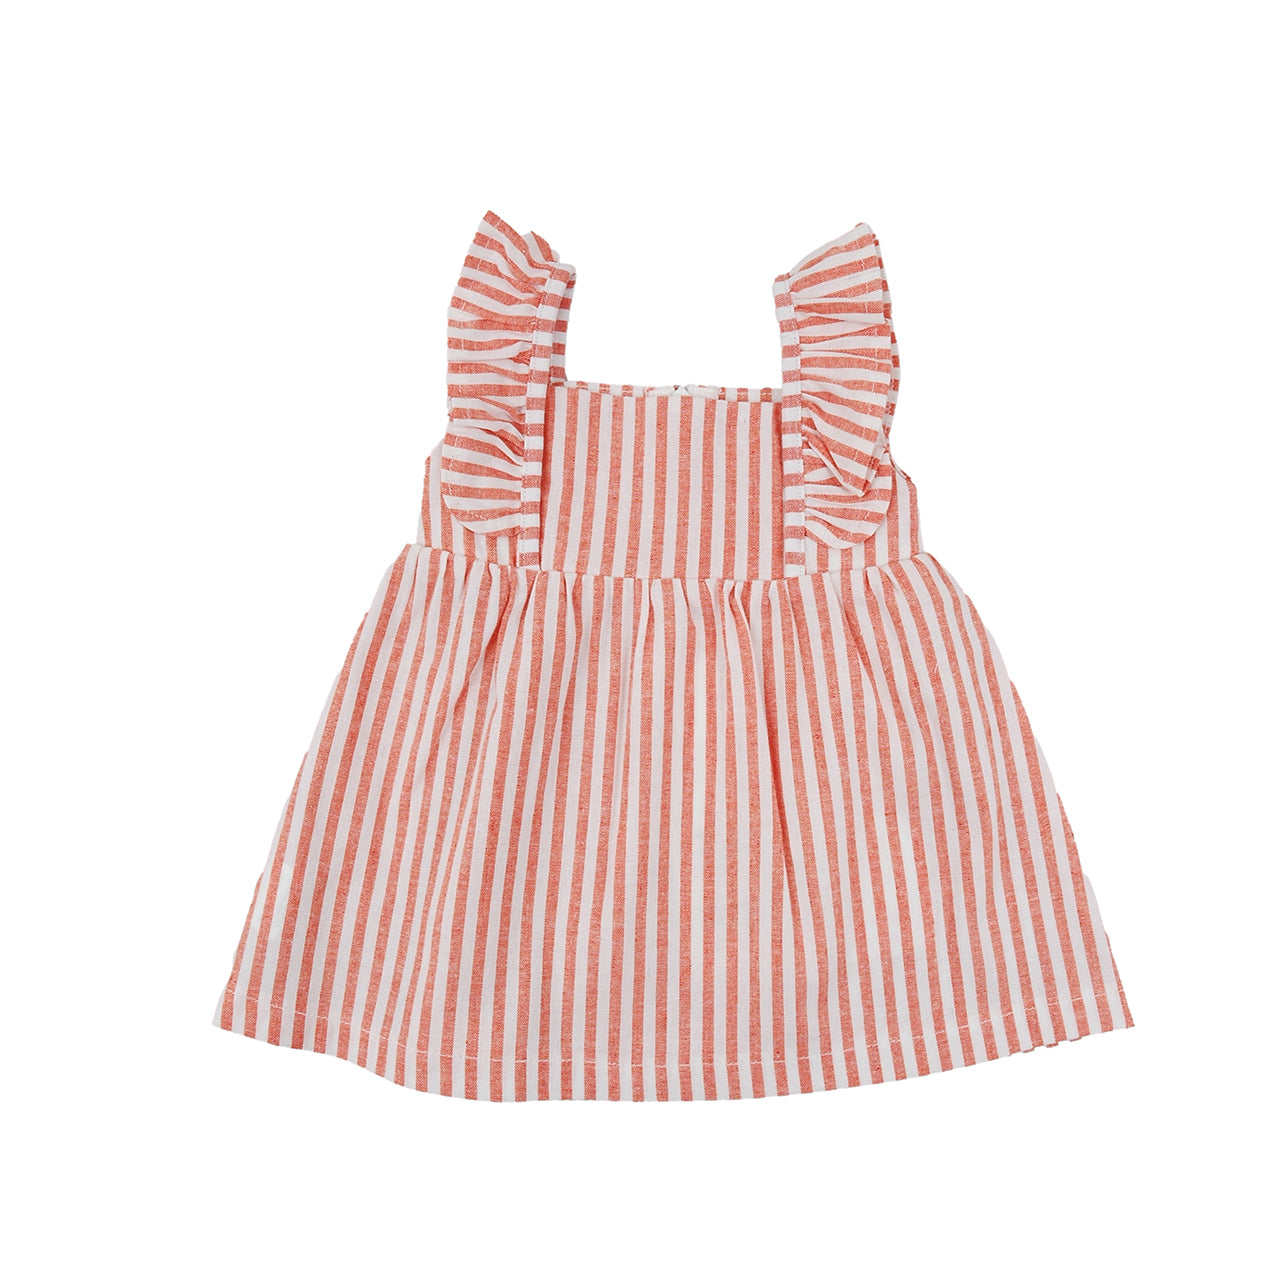 Sleeveless Orange Striped Dress